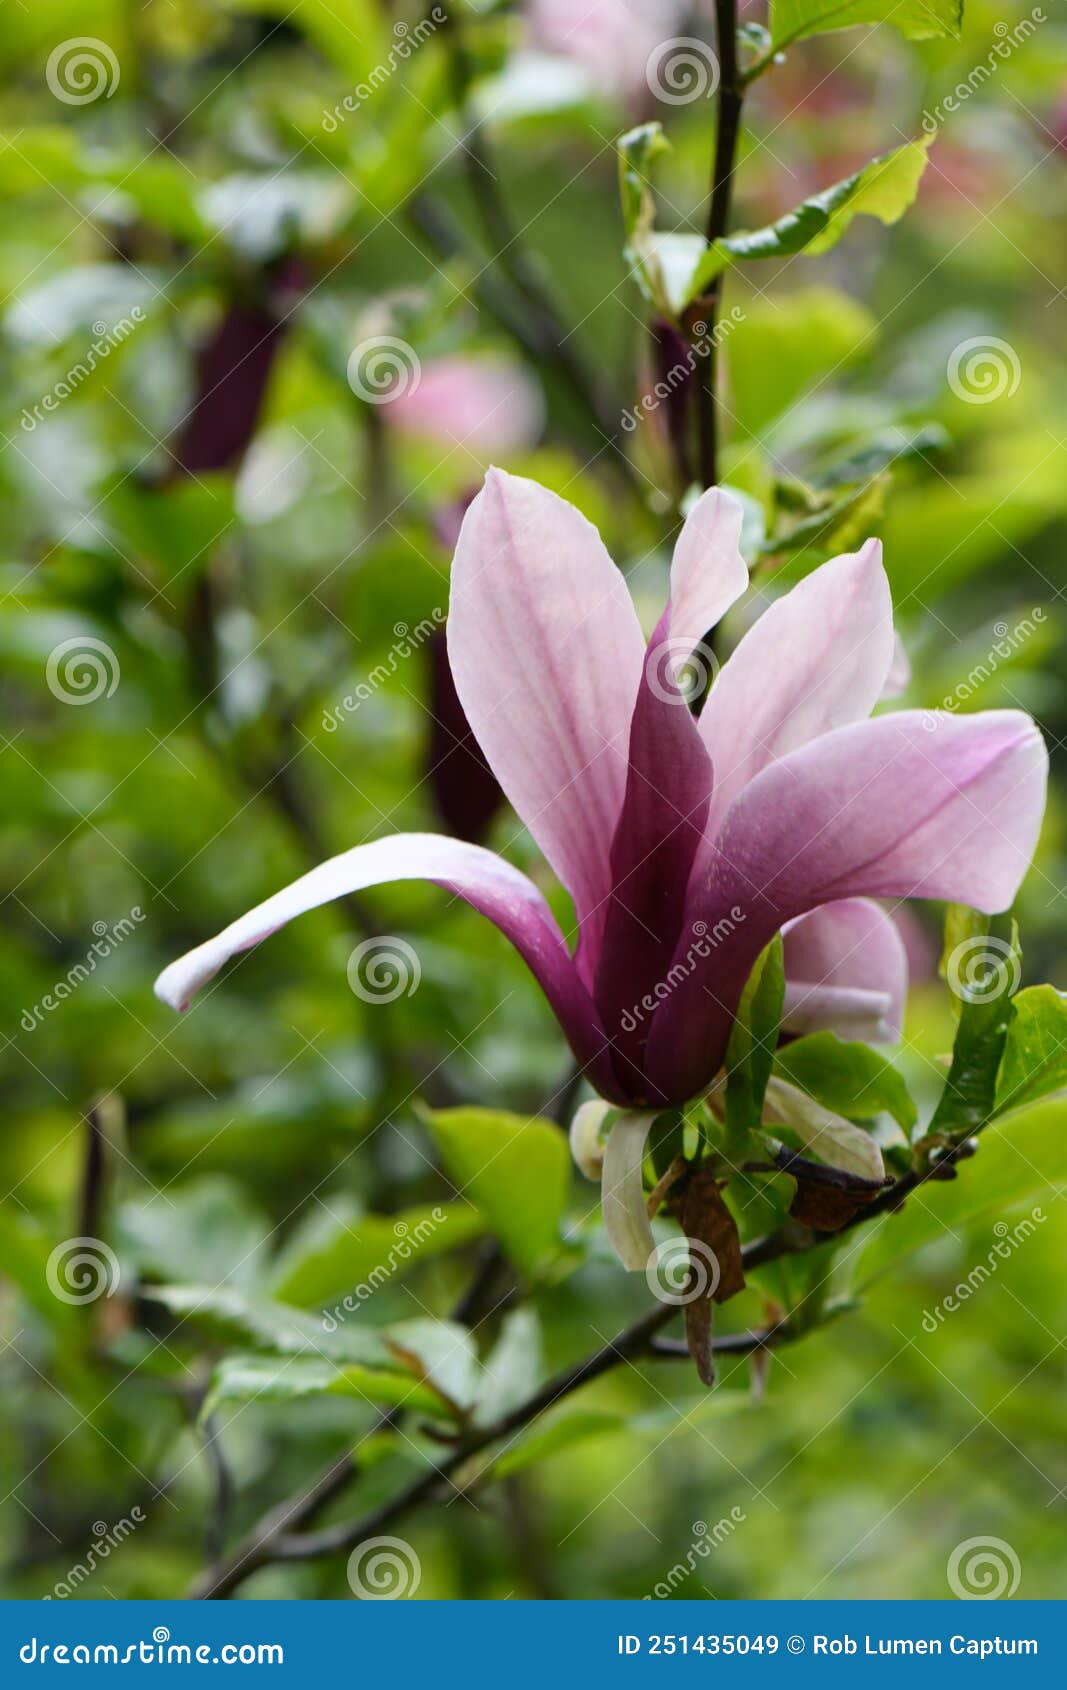 mulan magnolia liliiflora nigra, a purple flower